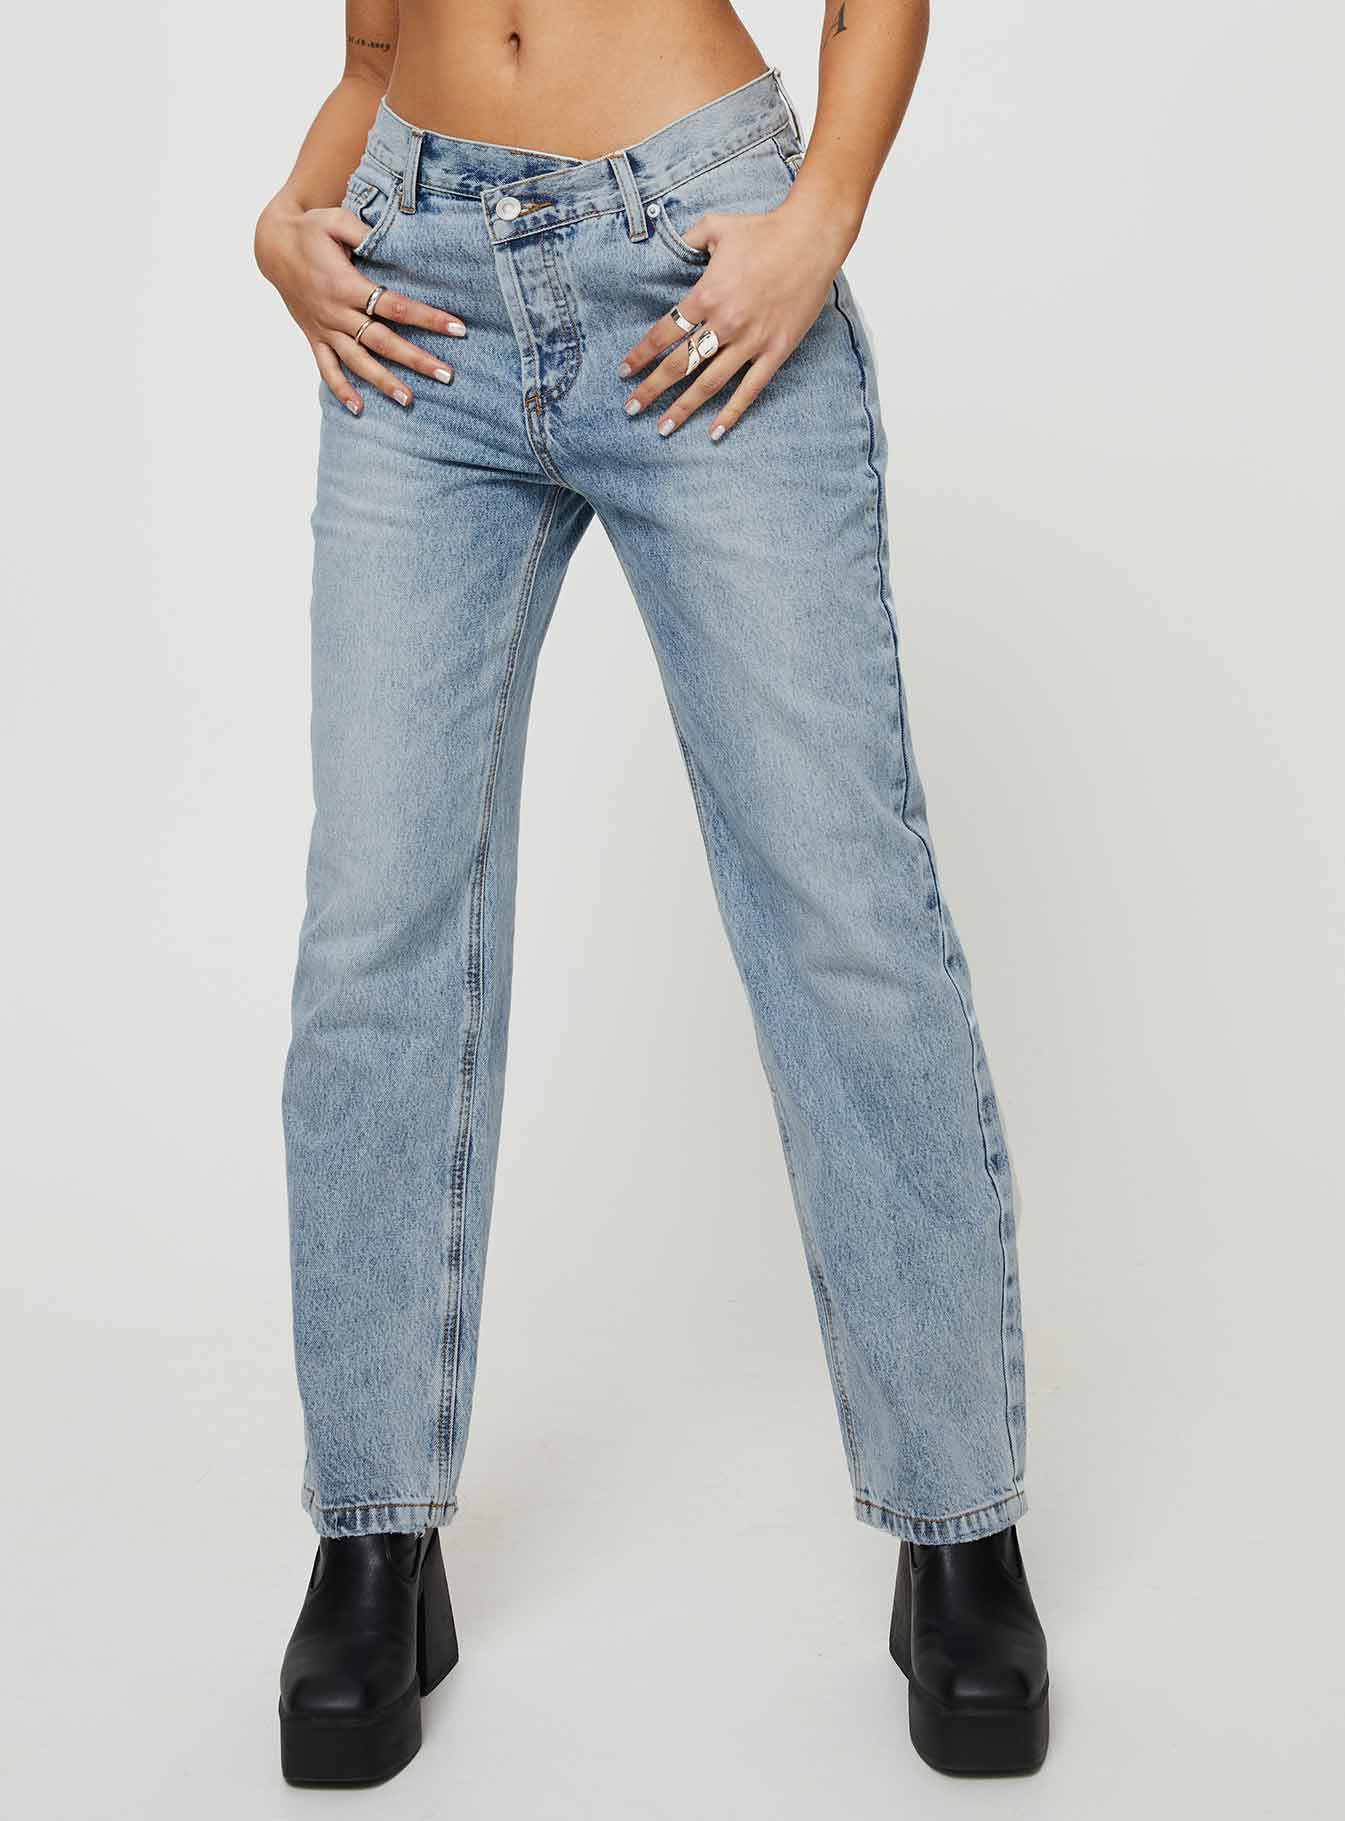 Lee Jeans Lower on the Waist Womens Size 14 Blue Denim Mid Rise STRETCH  WAIST | eBay